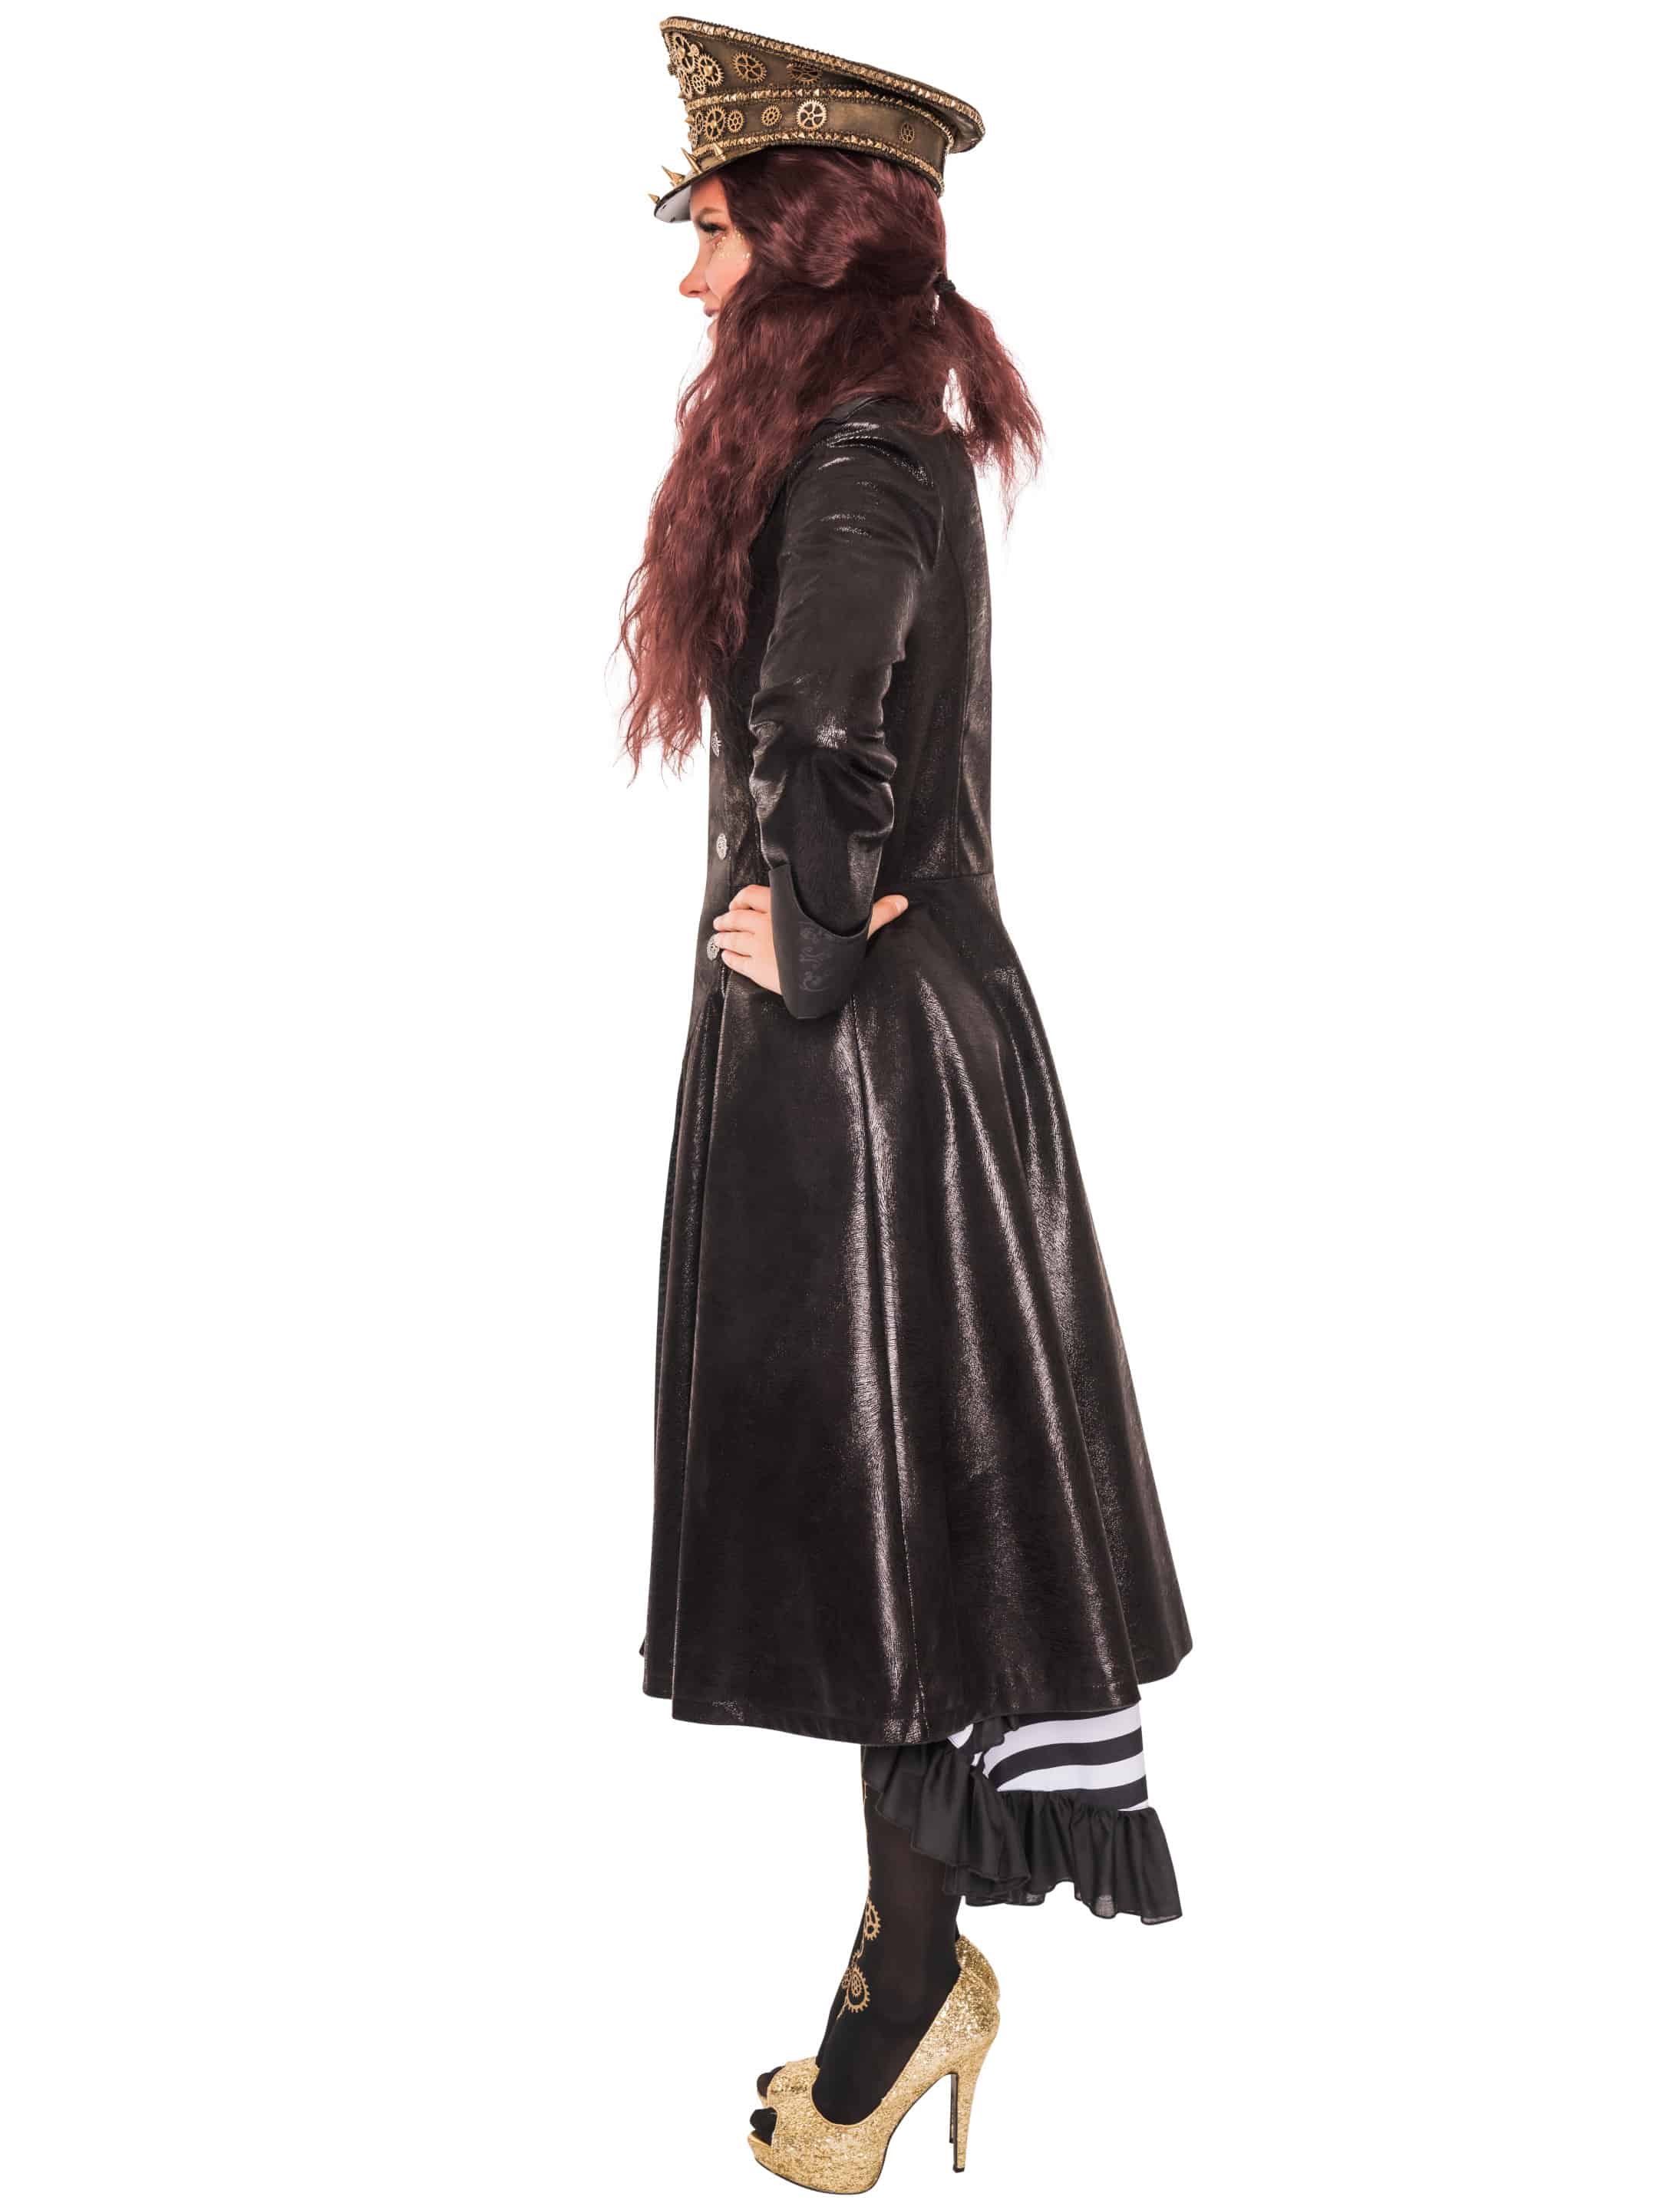 Mantel Steampunk Damen schwarz L